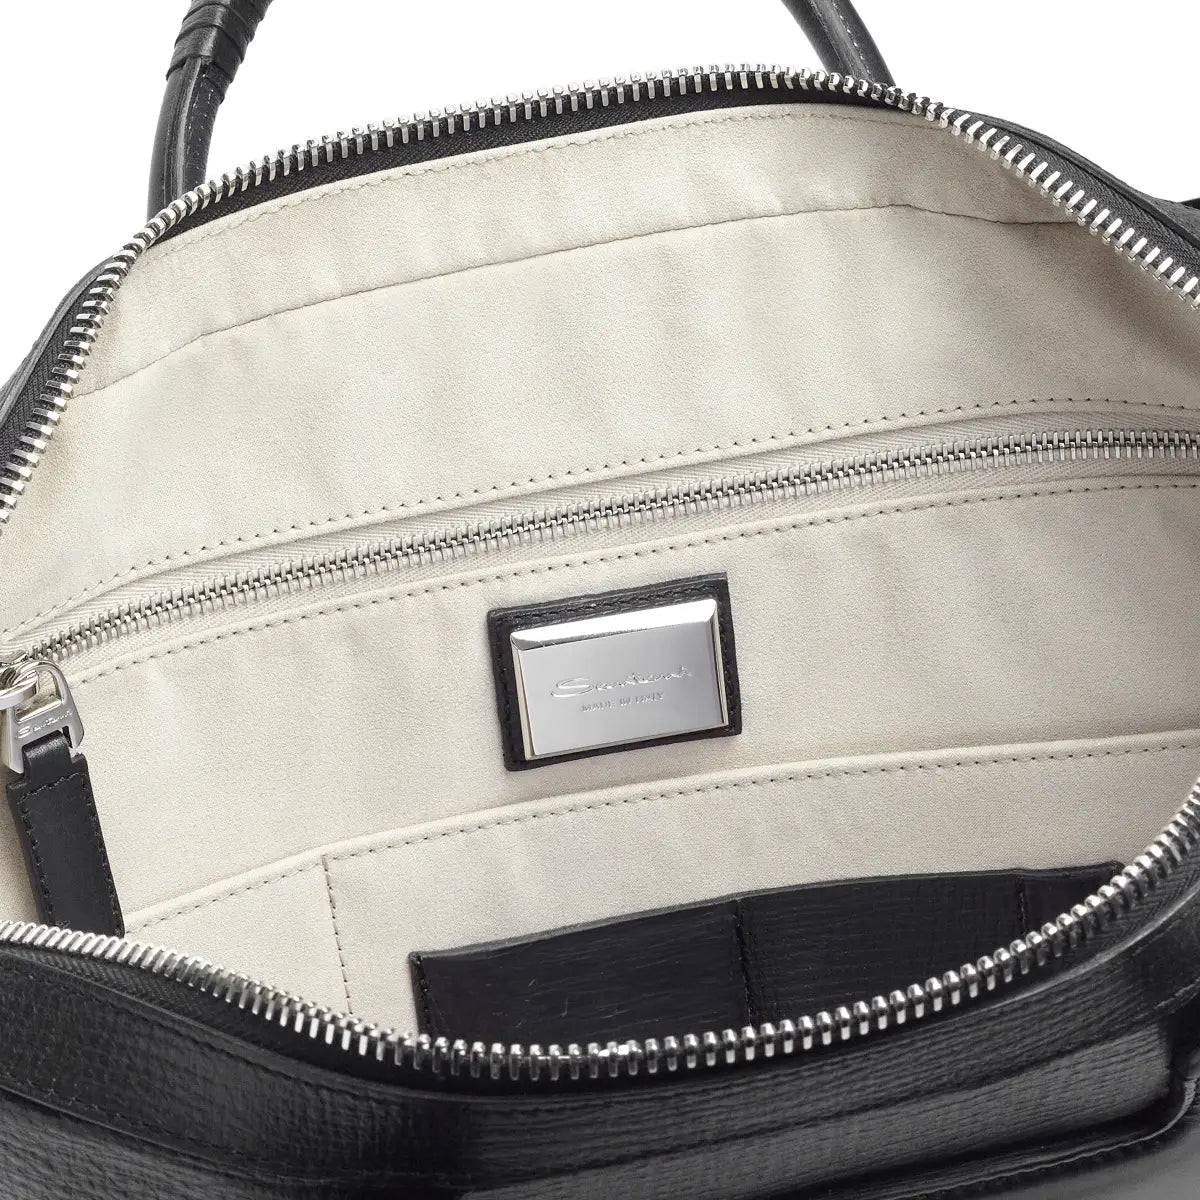 santoni briefcase black leather. inside view.